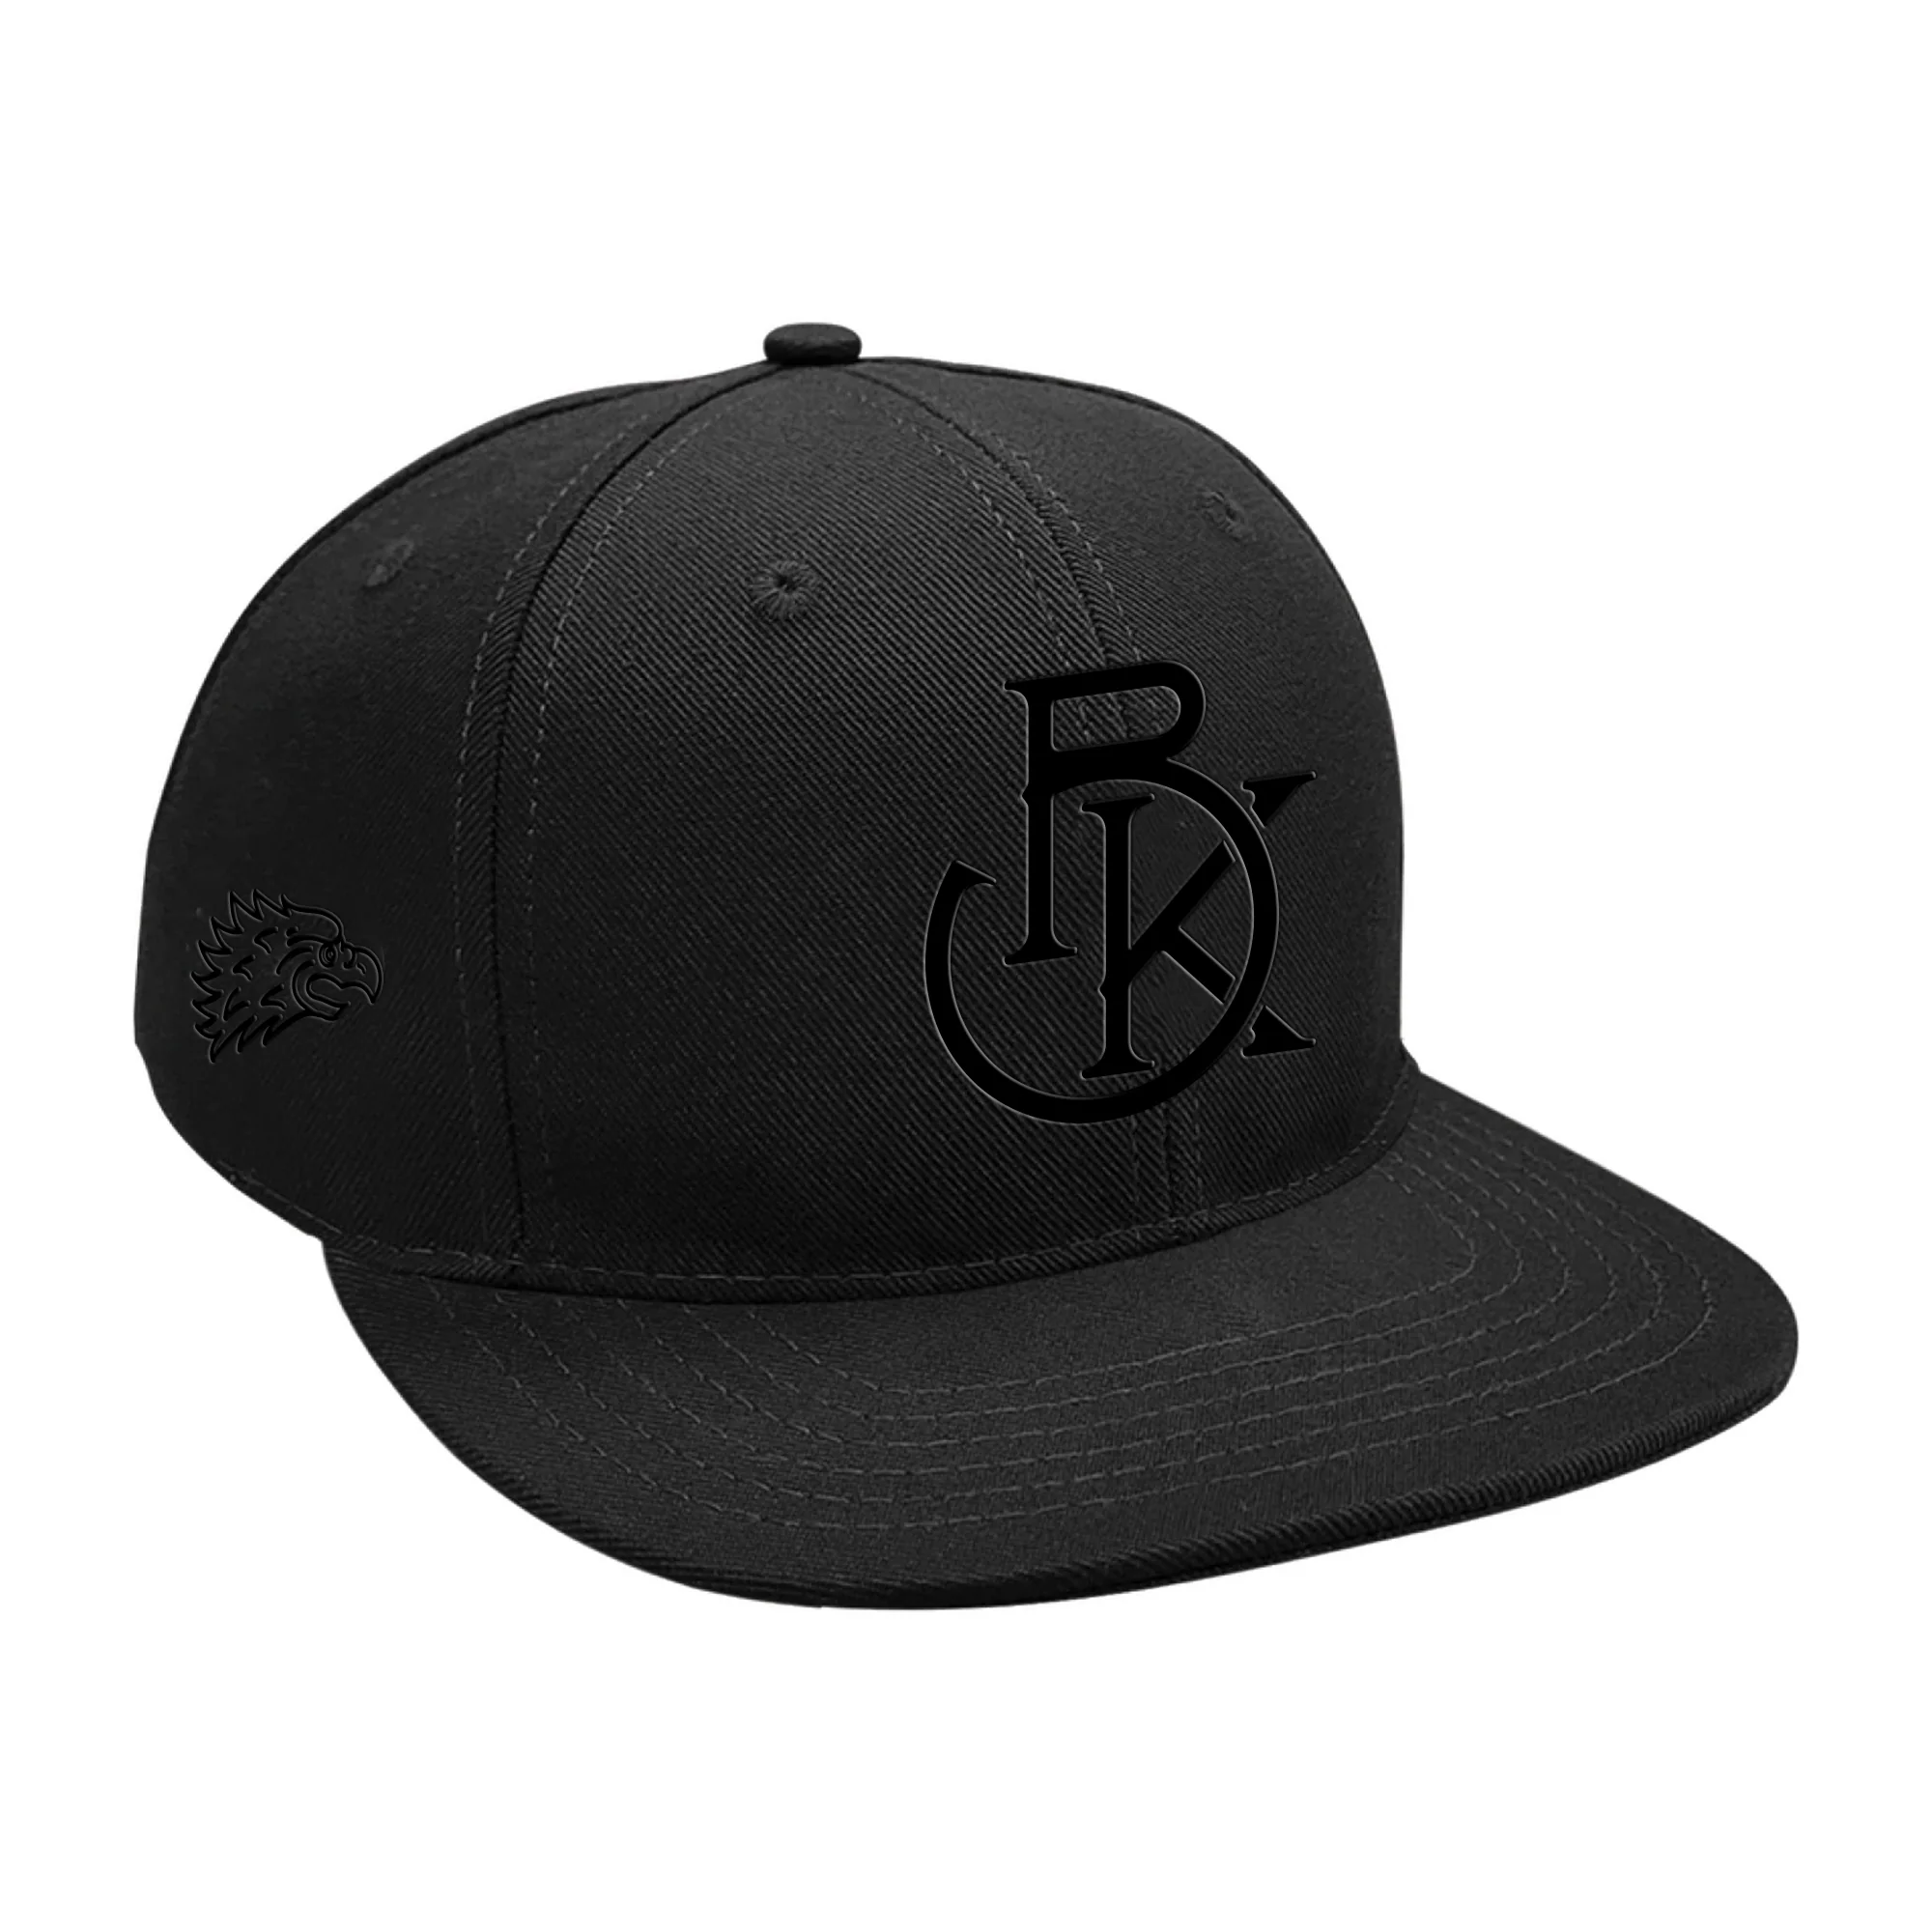 BK SnapBack Hat